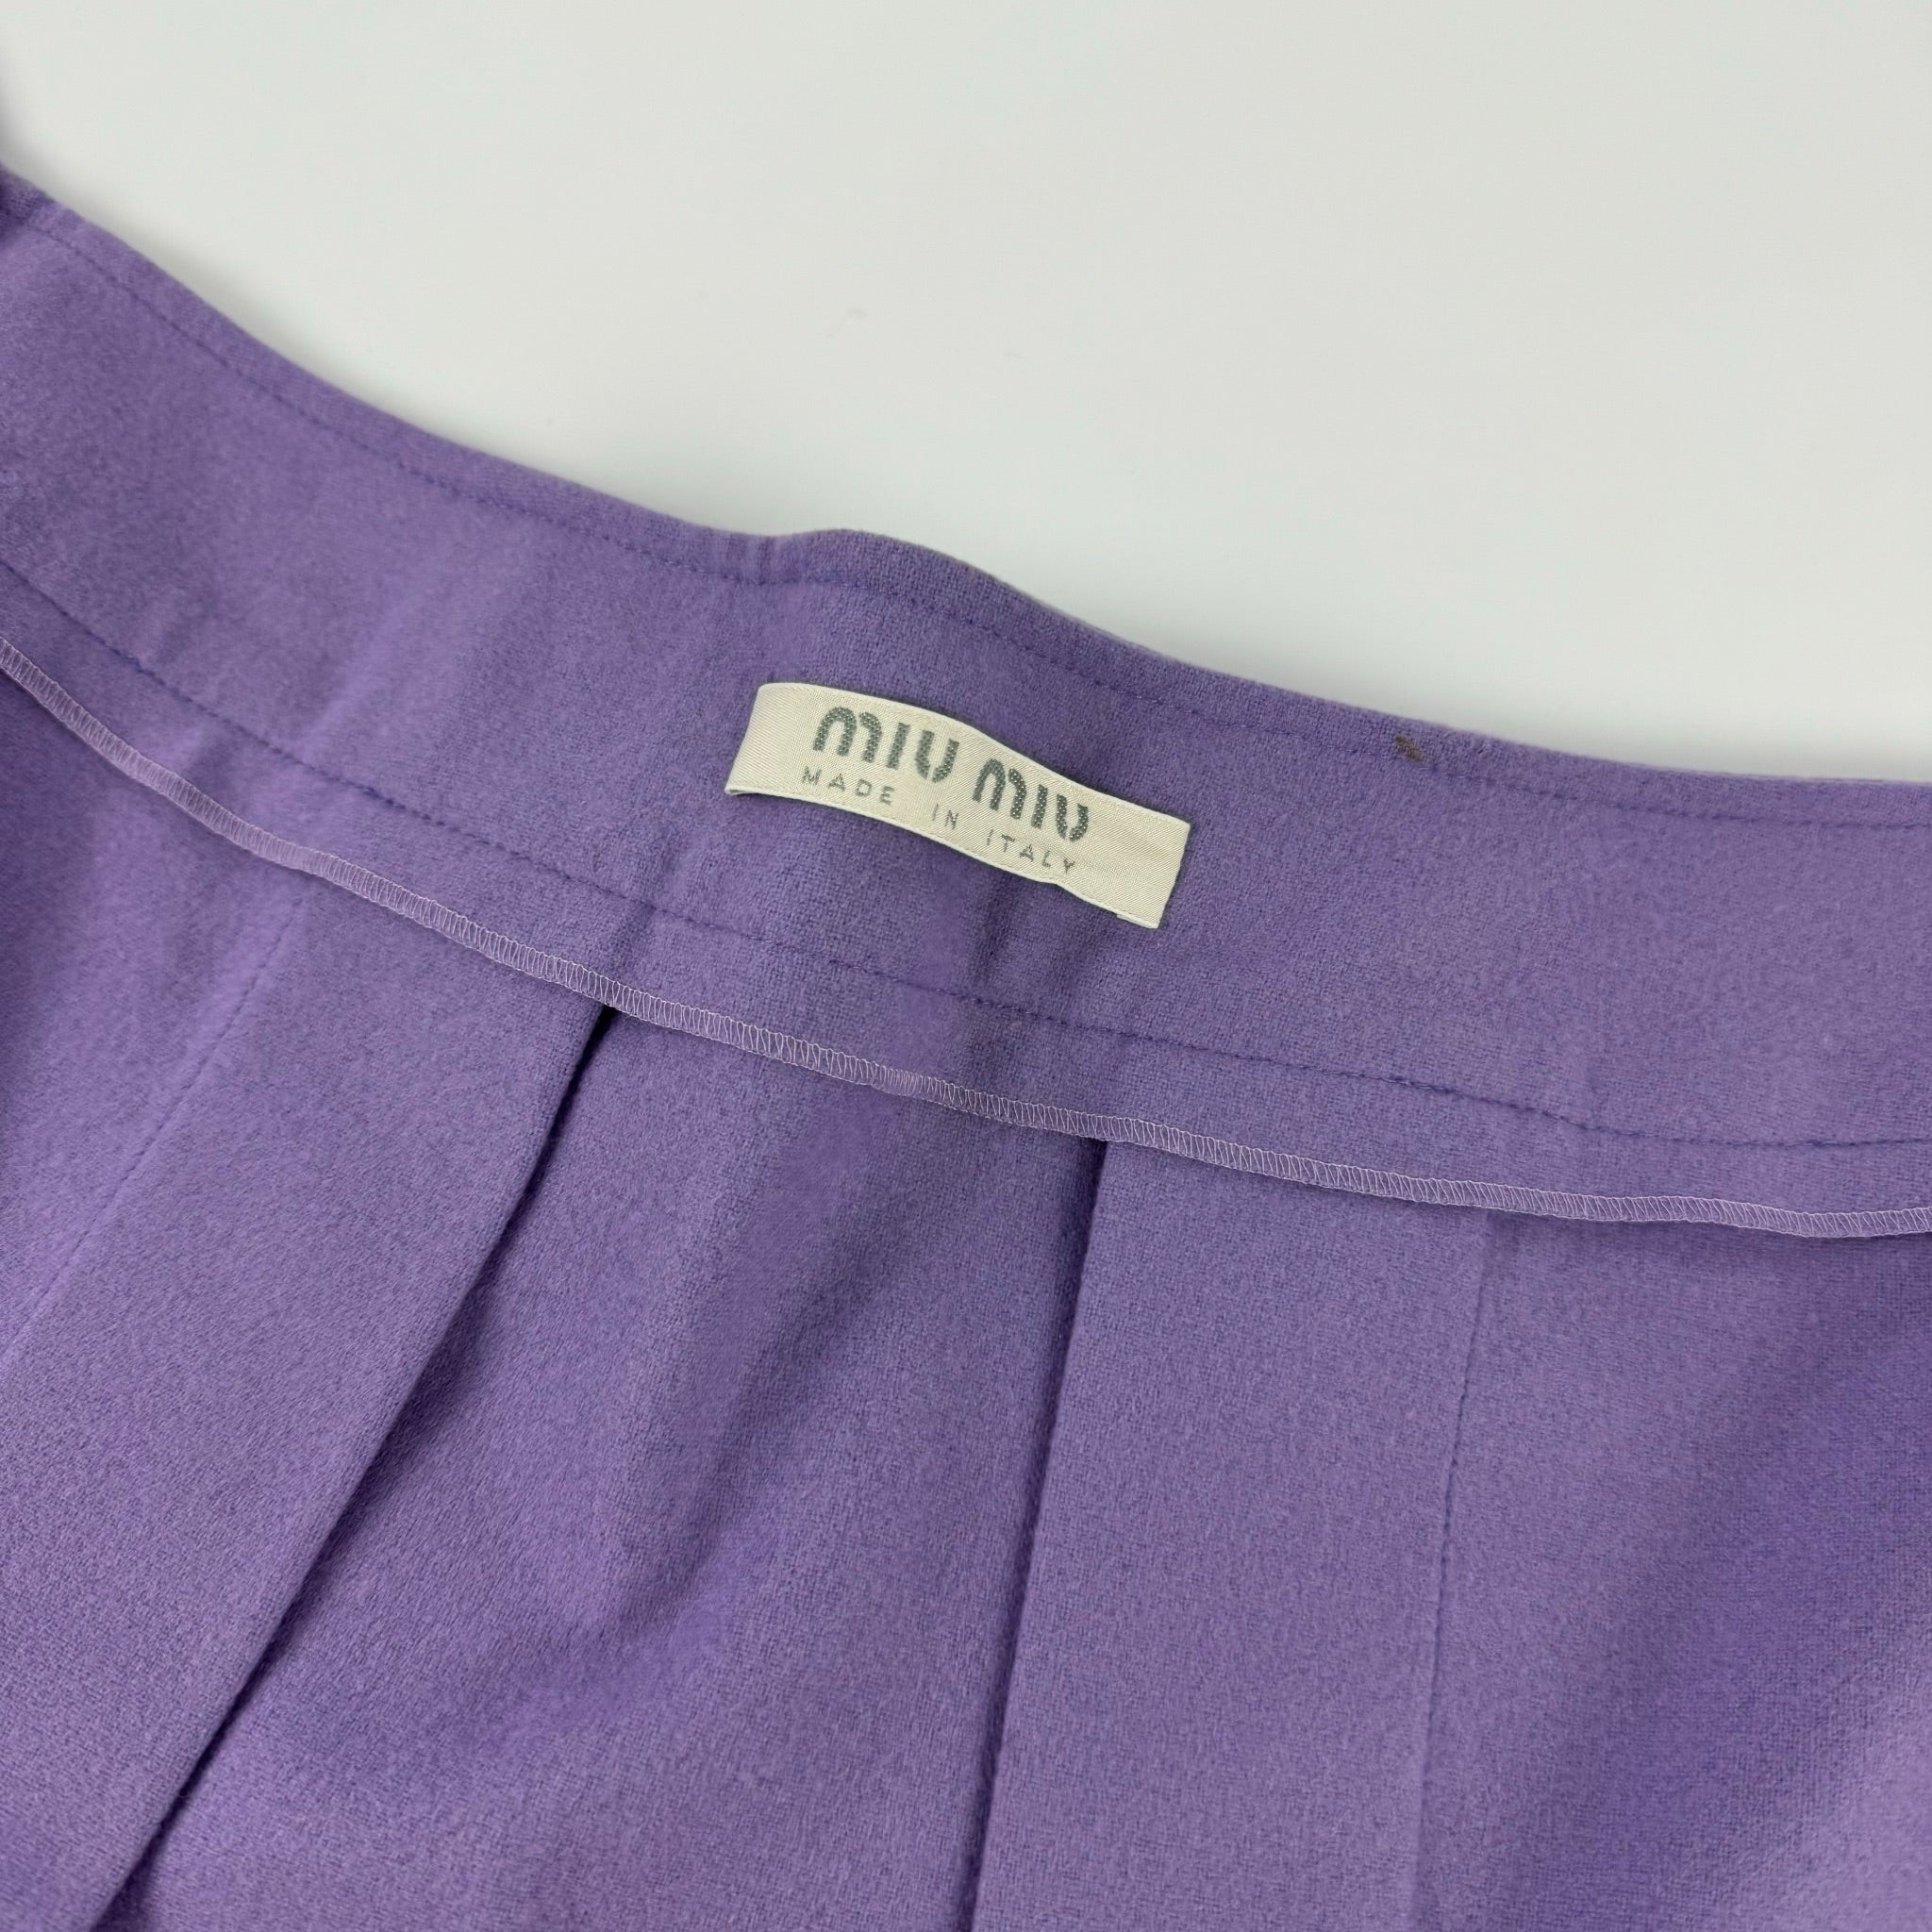 Miu Miu Lavender Wrap-Skirt, 1996 - 4